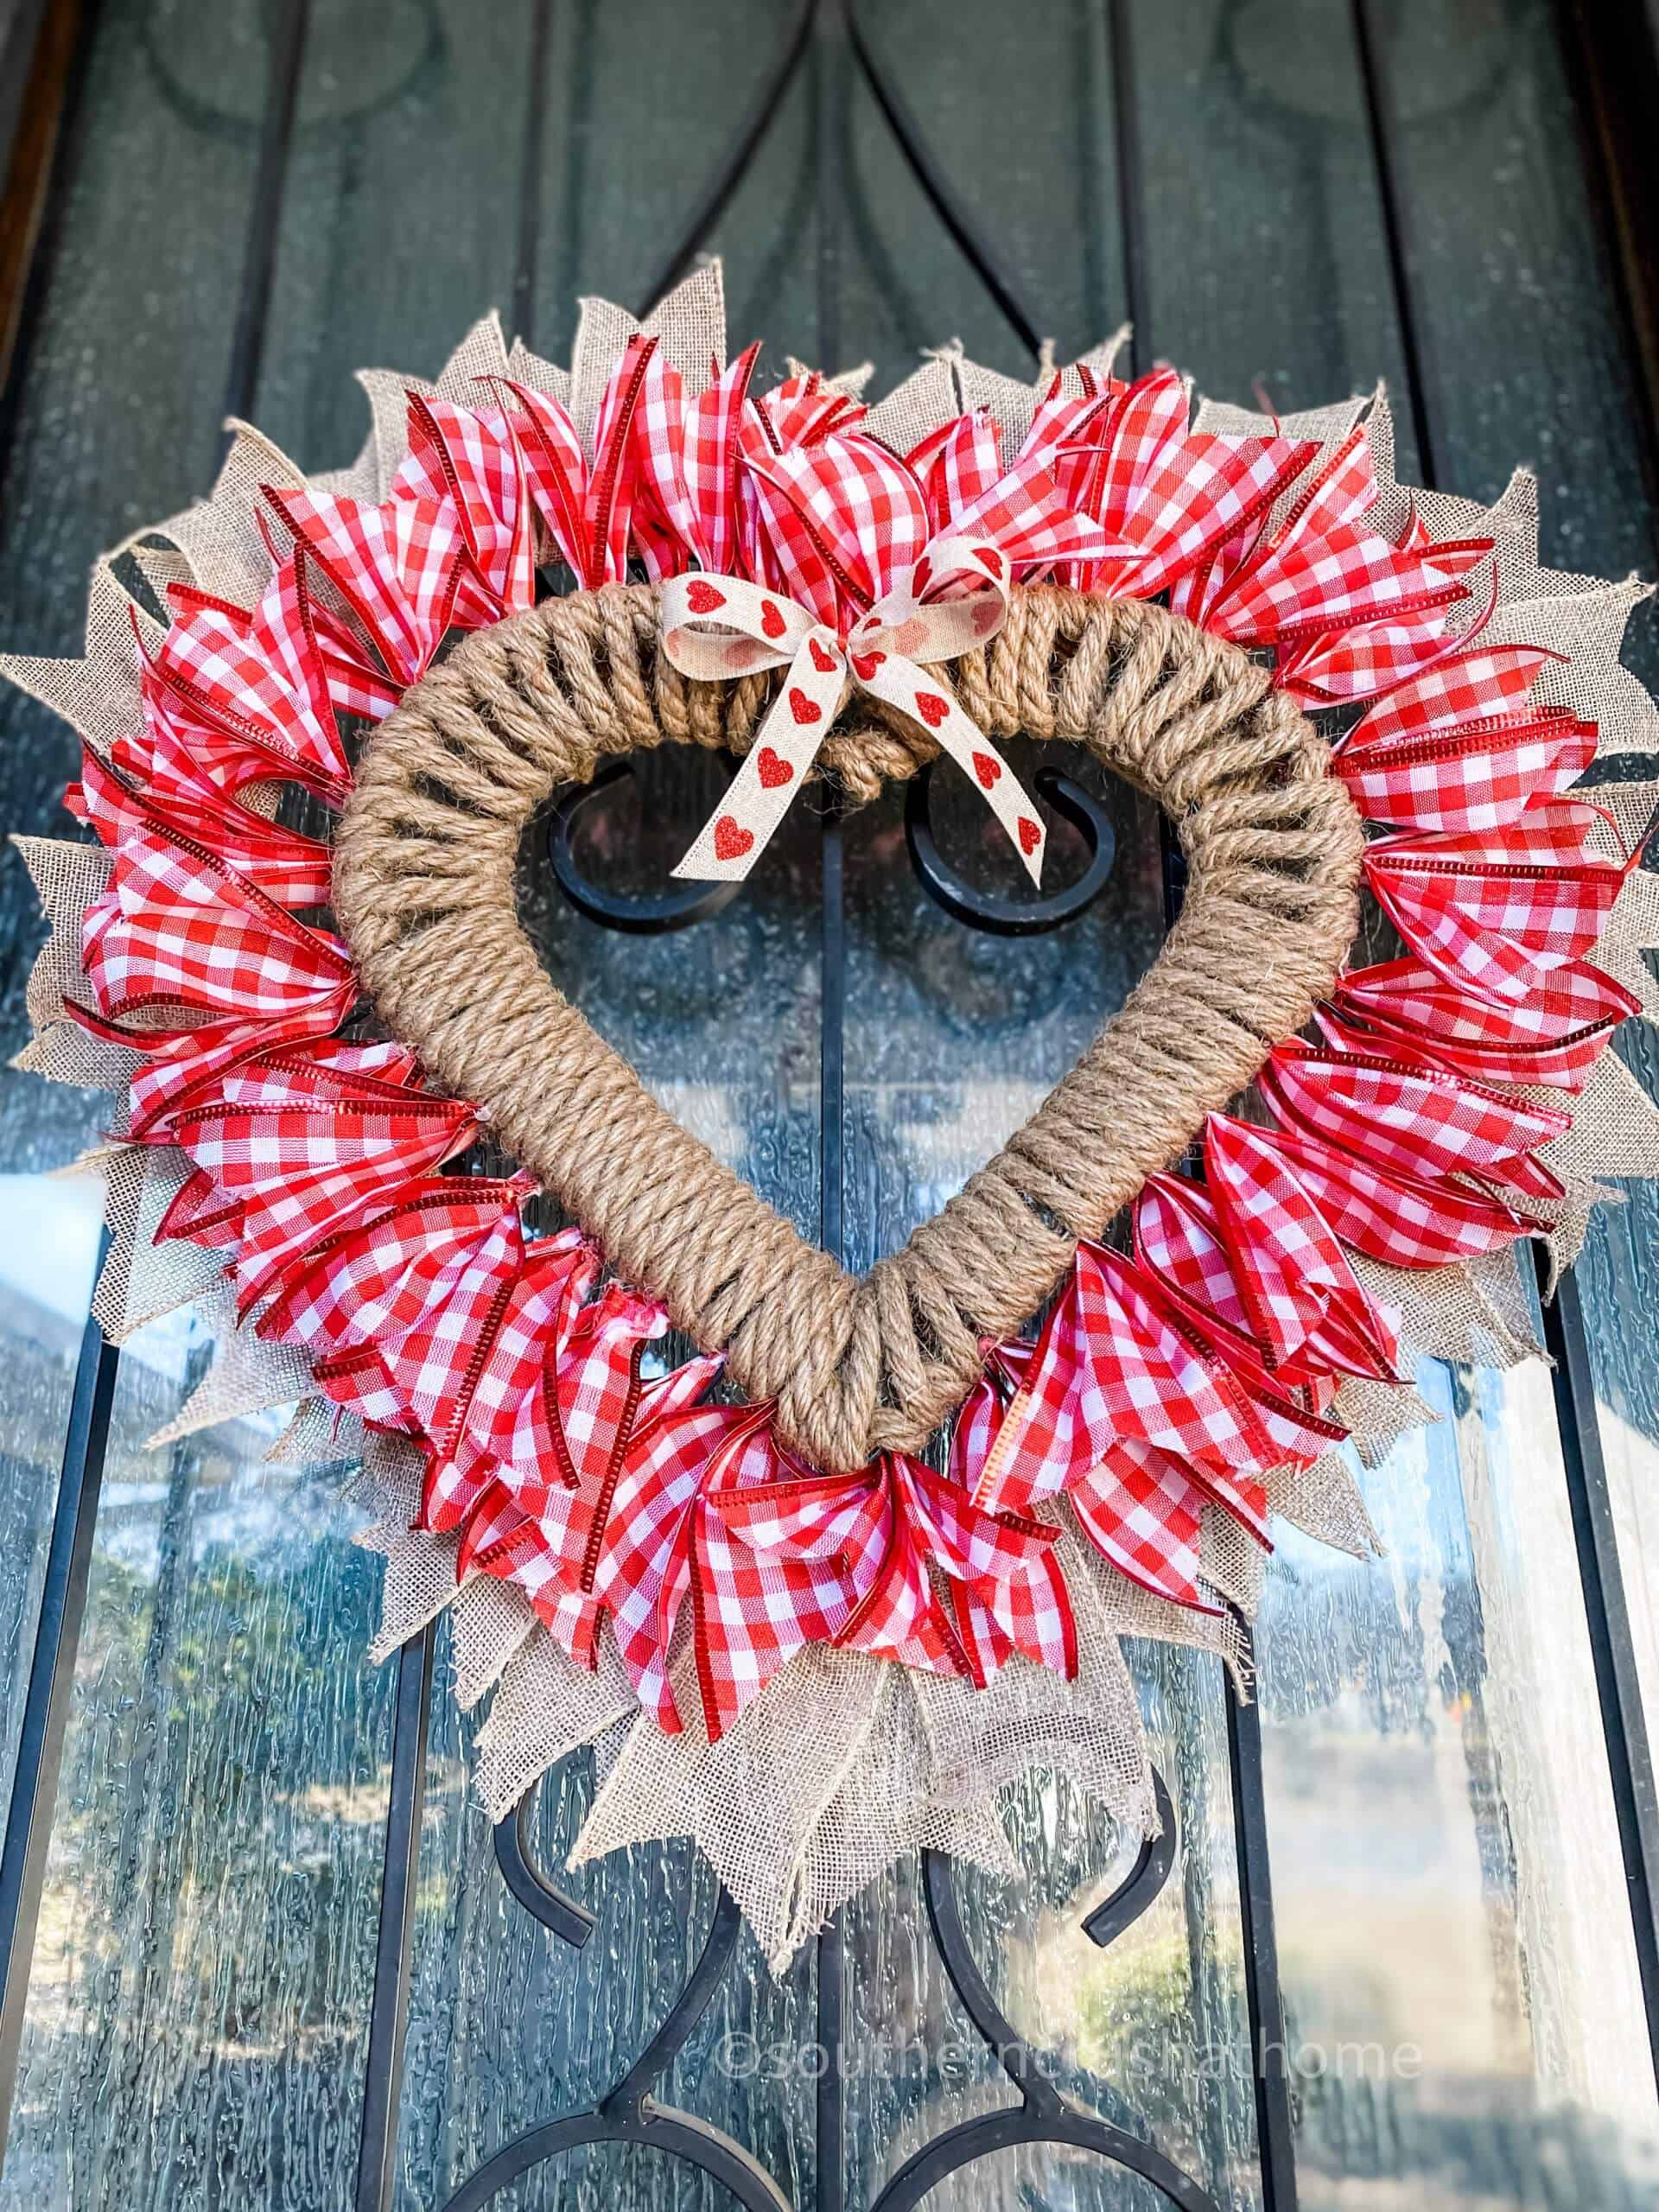 Rainbow Heart Wreath in Culver City, CA